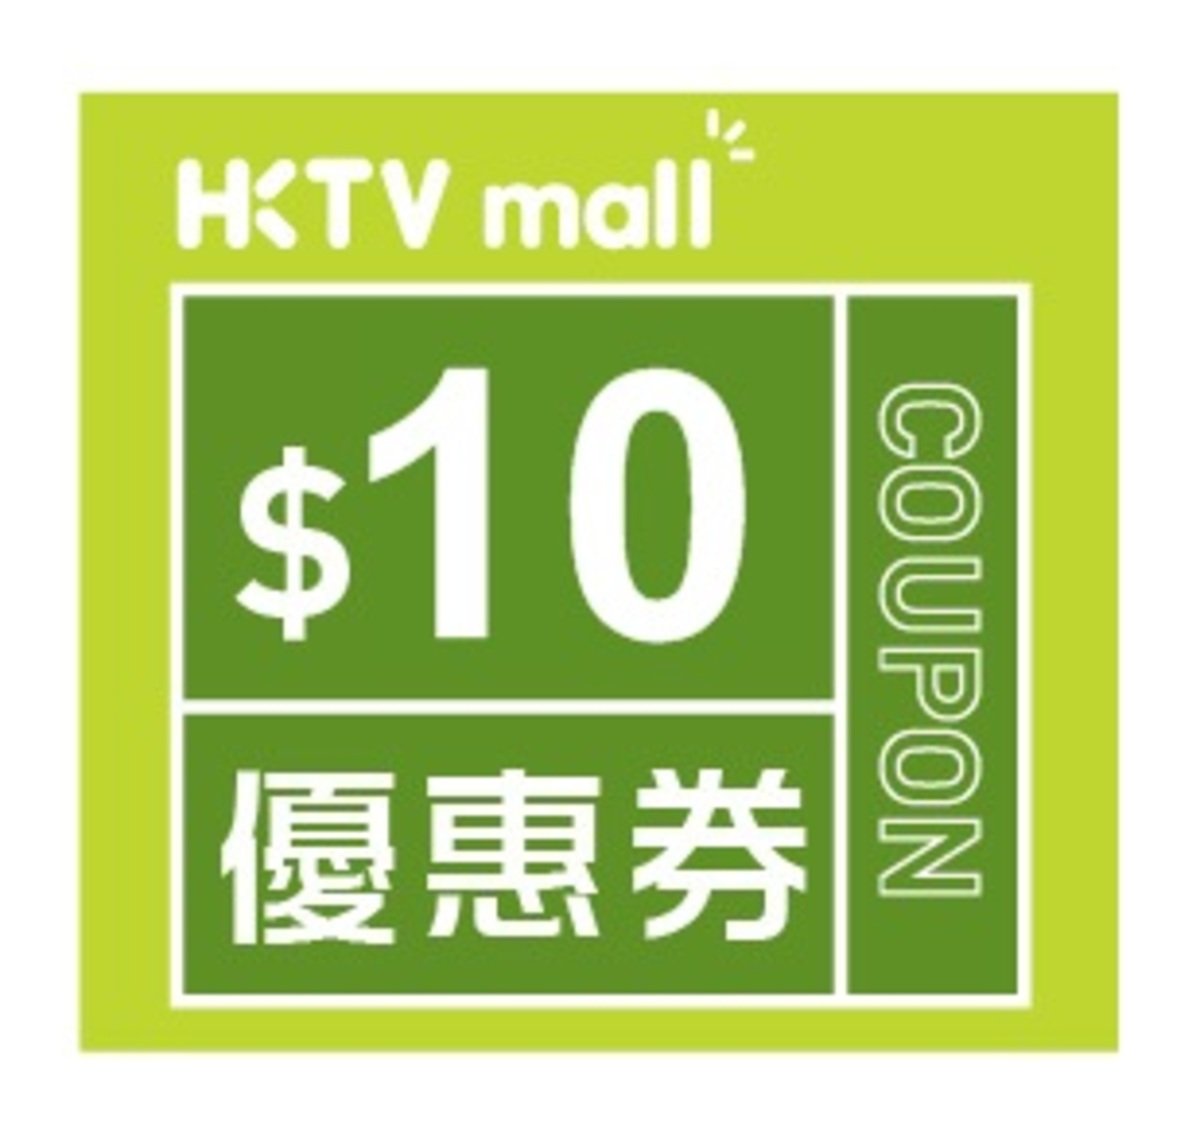 $10 HKTVmall 優惠碼 [有效日期至：2017月10月31日]